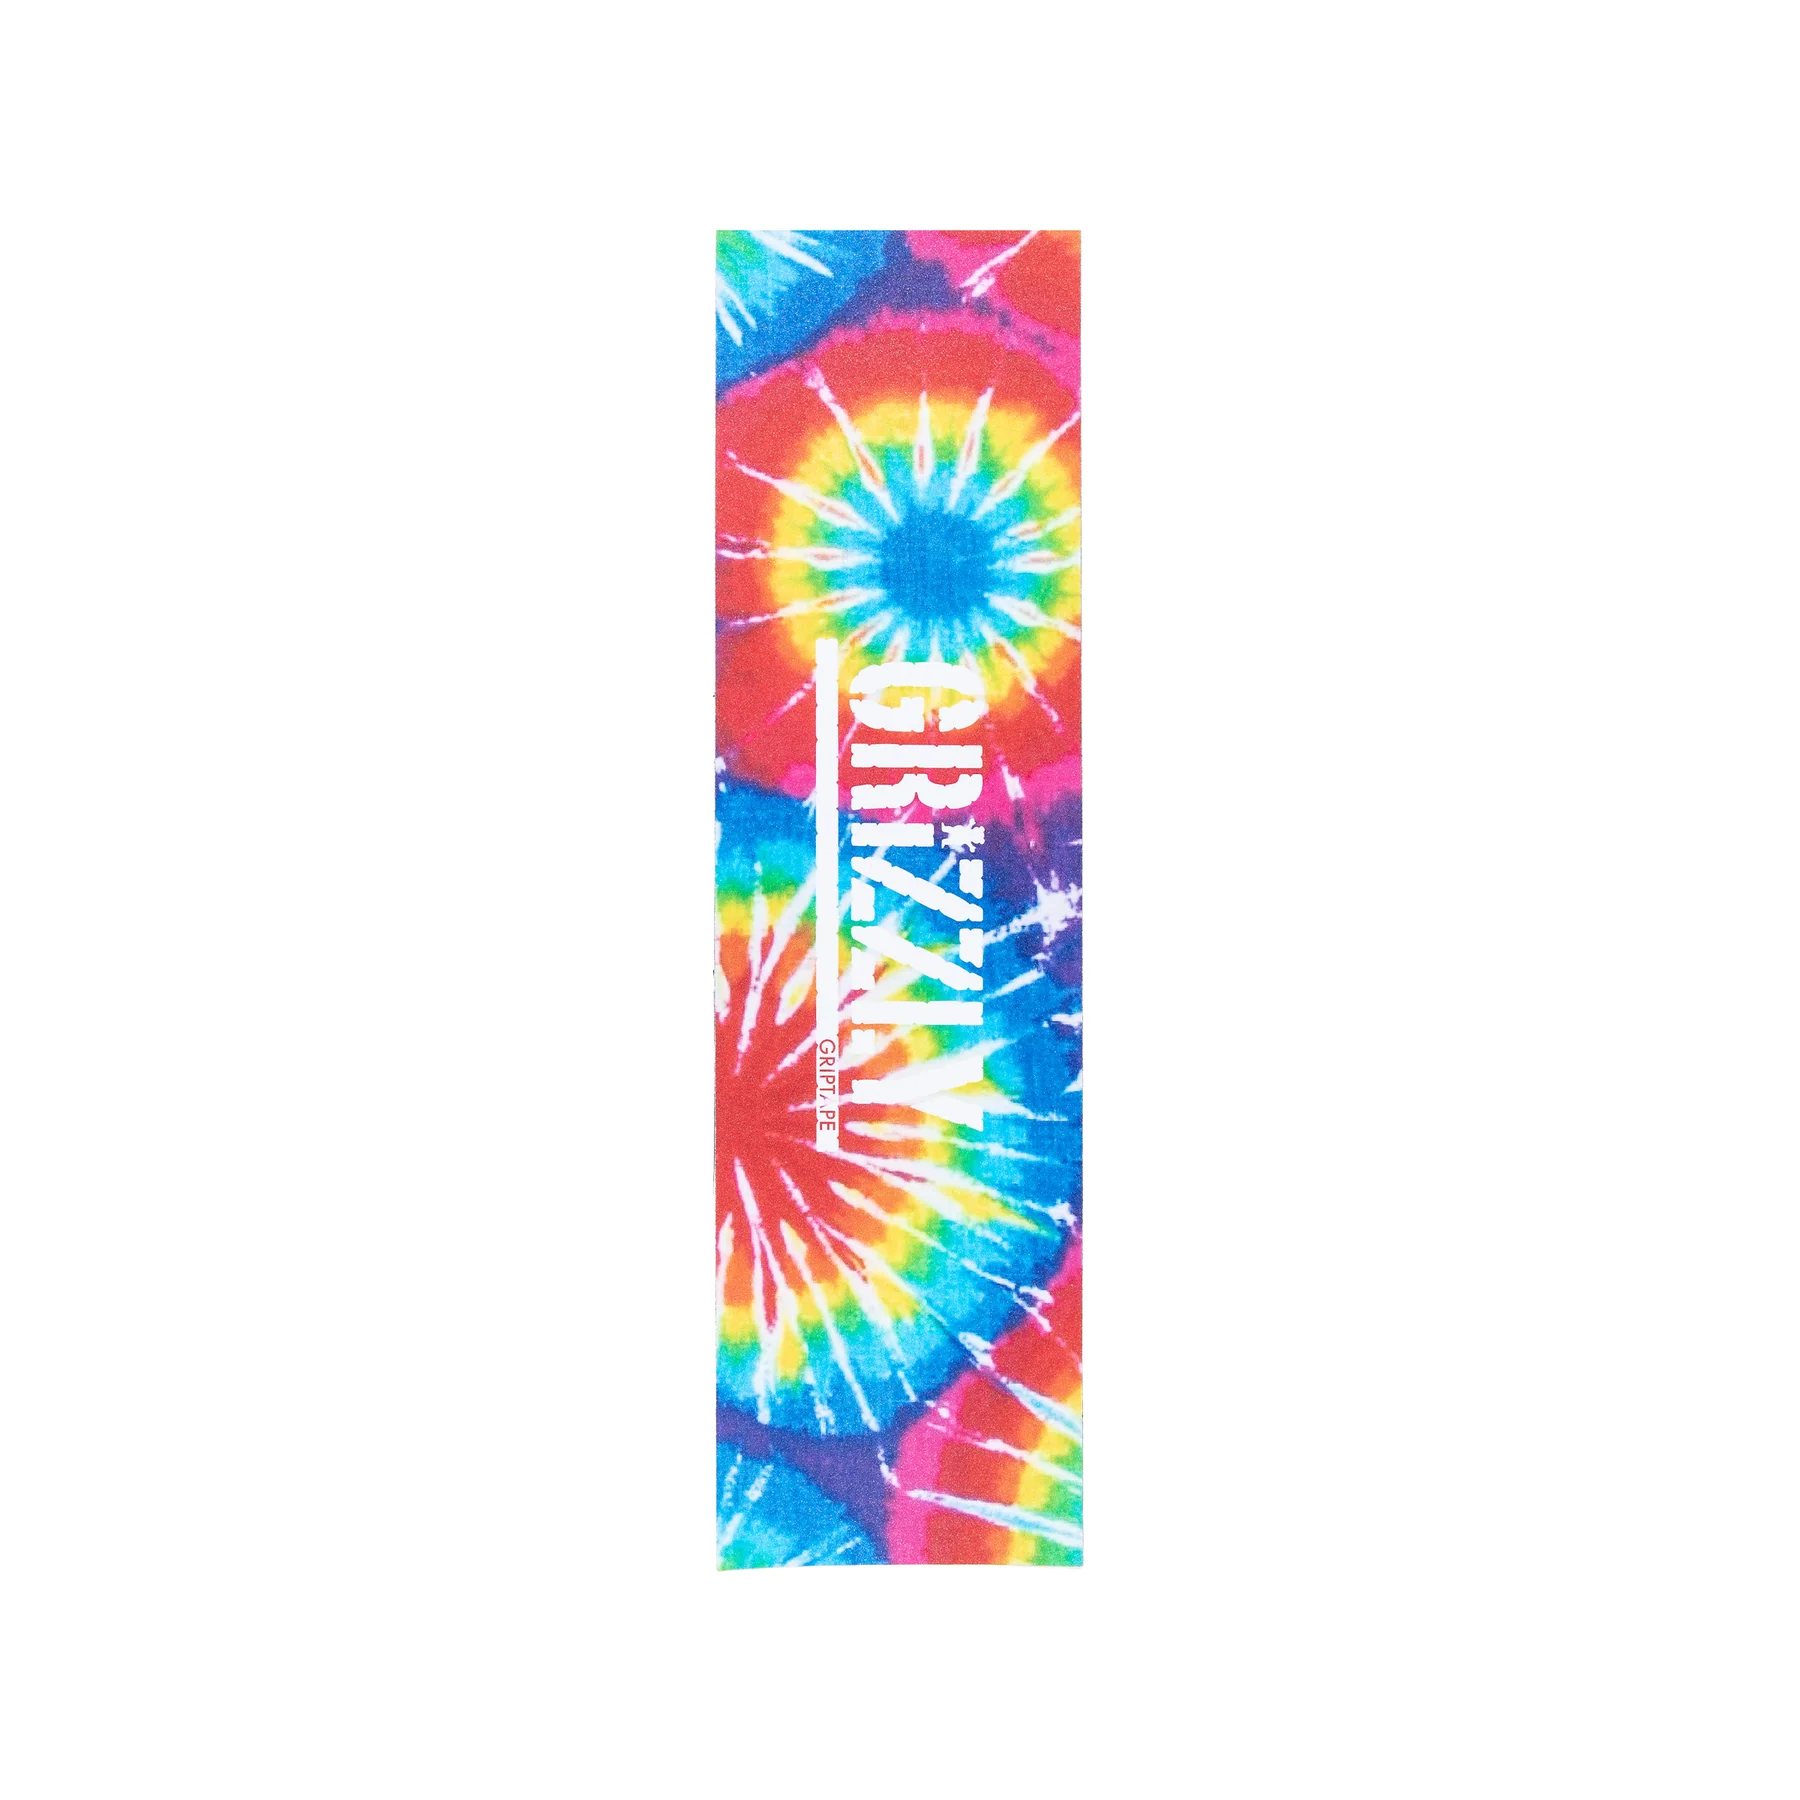 Grizzly Grip Skateboard Grip Tape Sheet- Assorted Tie Dye